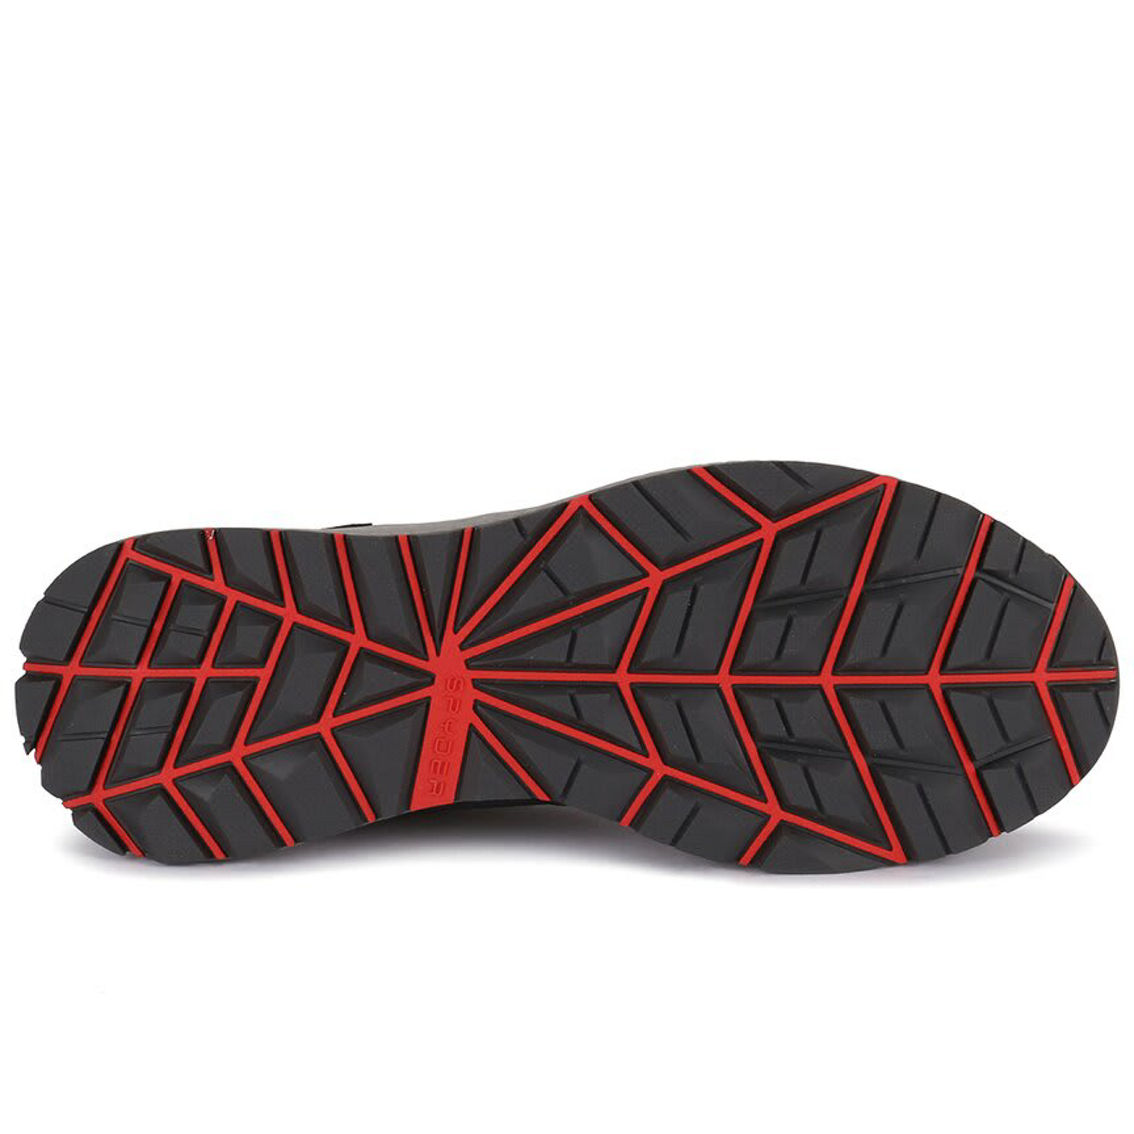 Spyder Blacktail Leather Shoe - Image 4 of 4